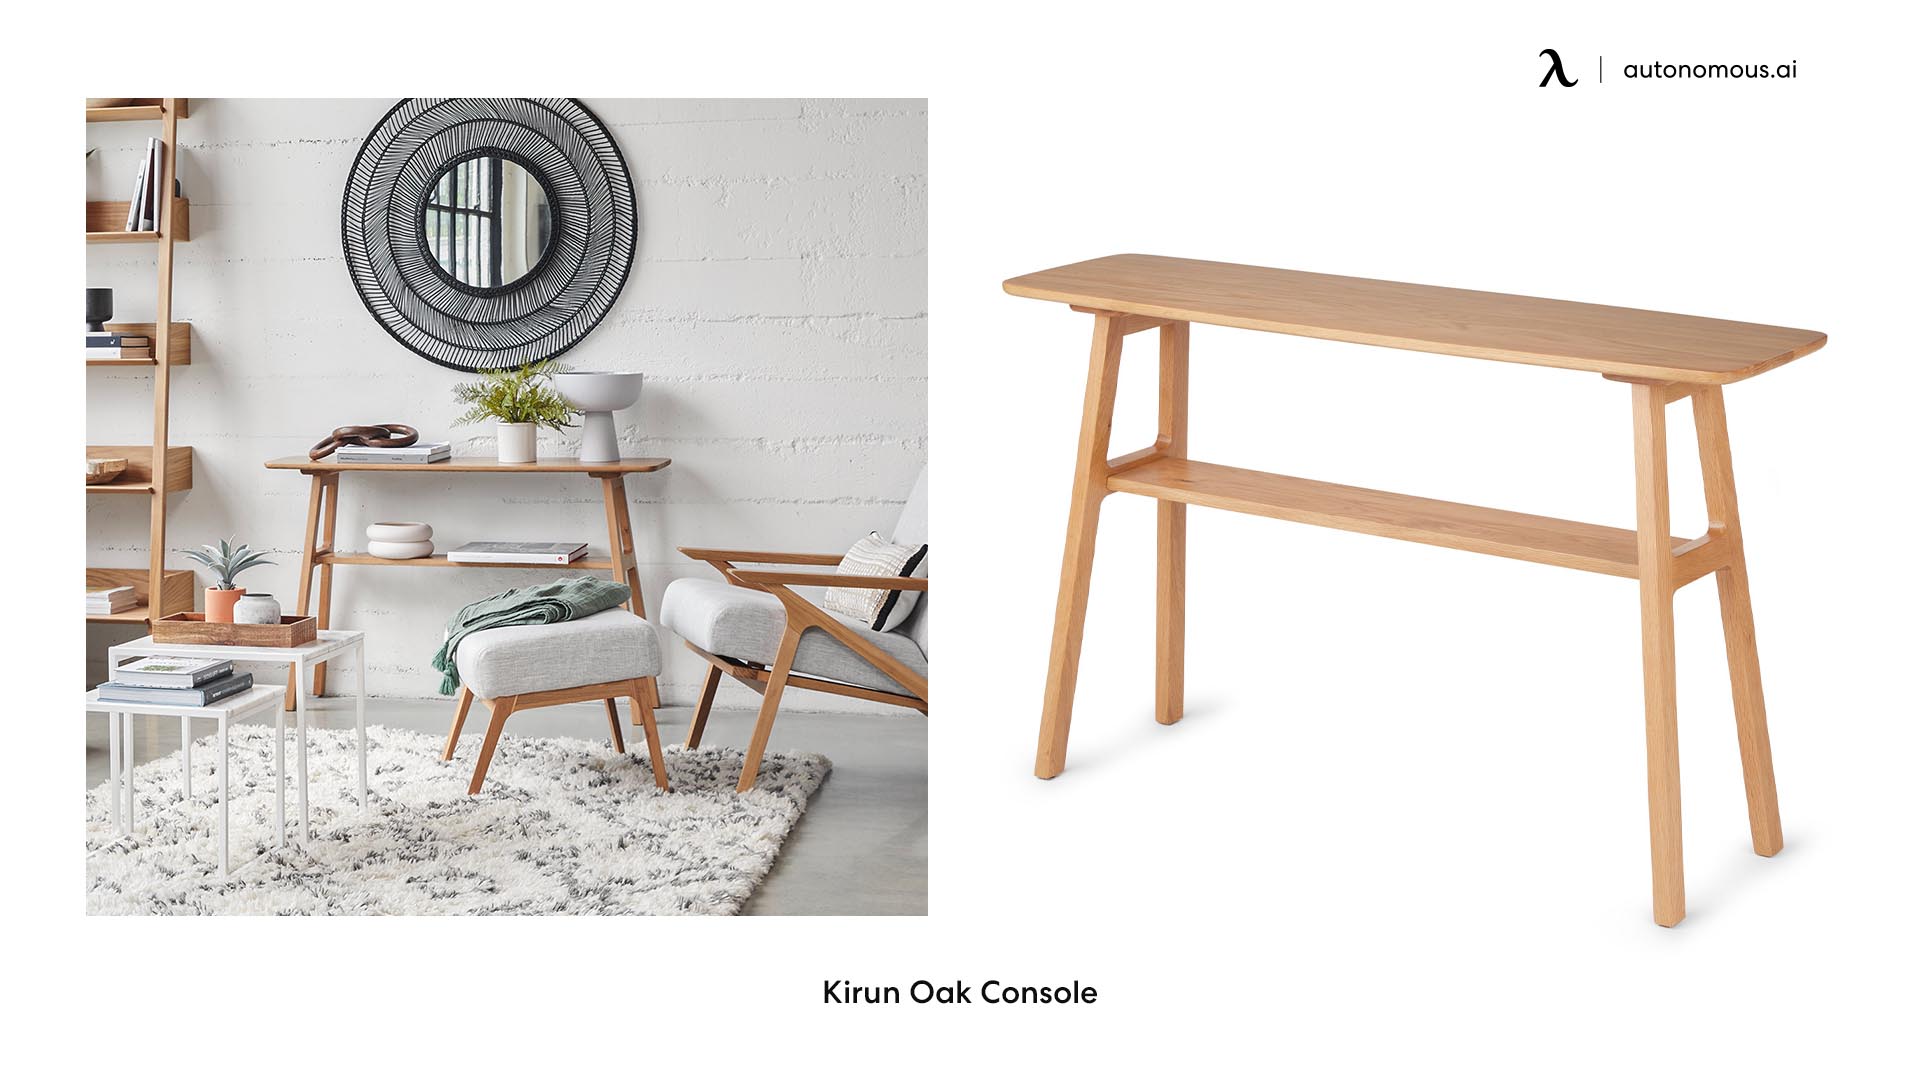 Kirun Oak Console modern wood desk